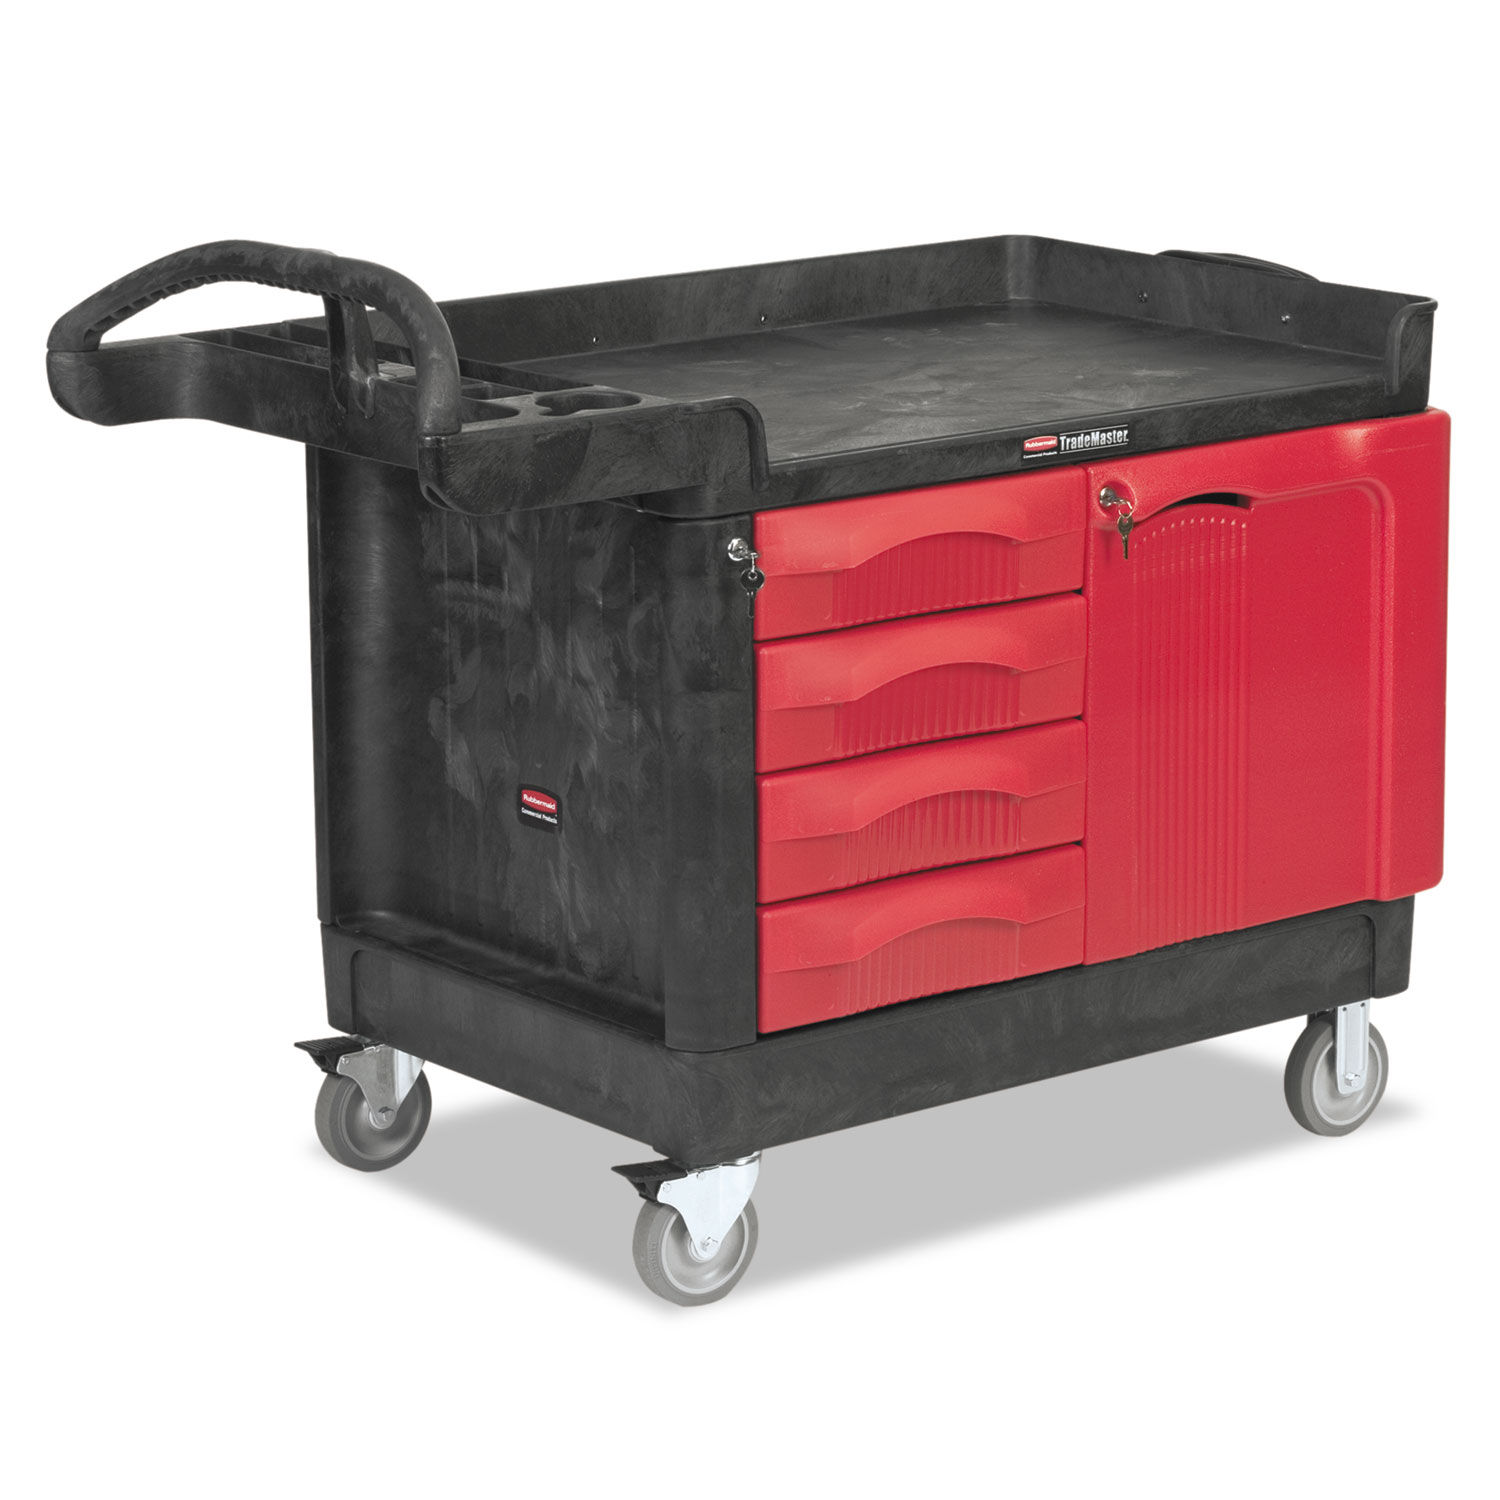 TradeMaster Cart with One Door Plastic, 3 Shelves, 4 Drawers, 750 lb Capacity, 26.25" x 49" x 38", Black